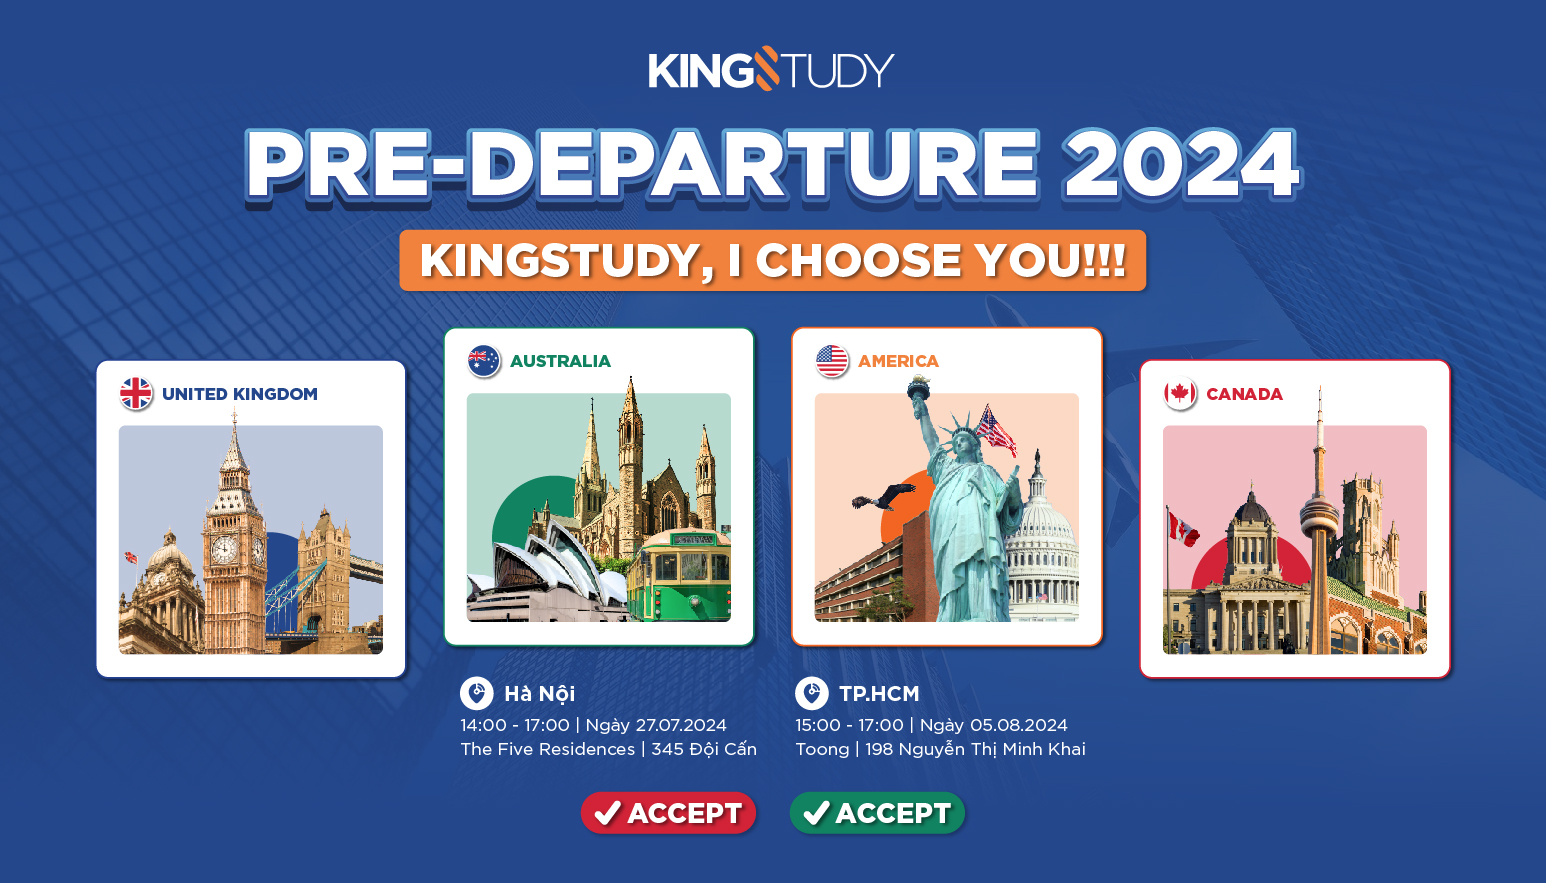 PRE - DEPARTURE 2024: KINGSTUDY, I CHOOSE YOU